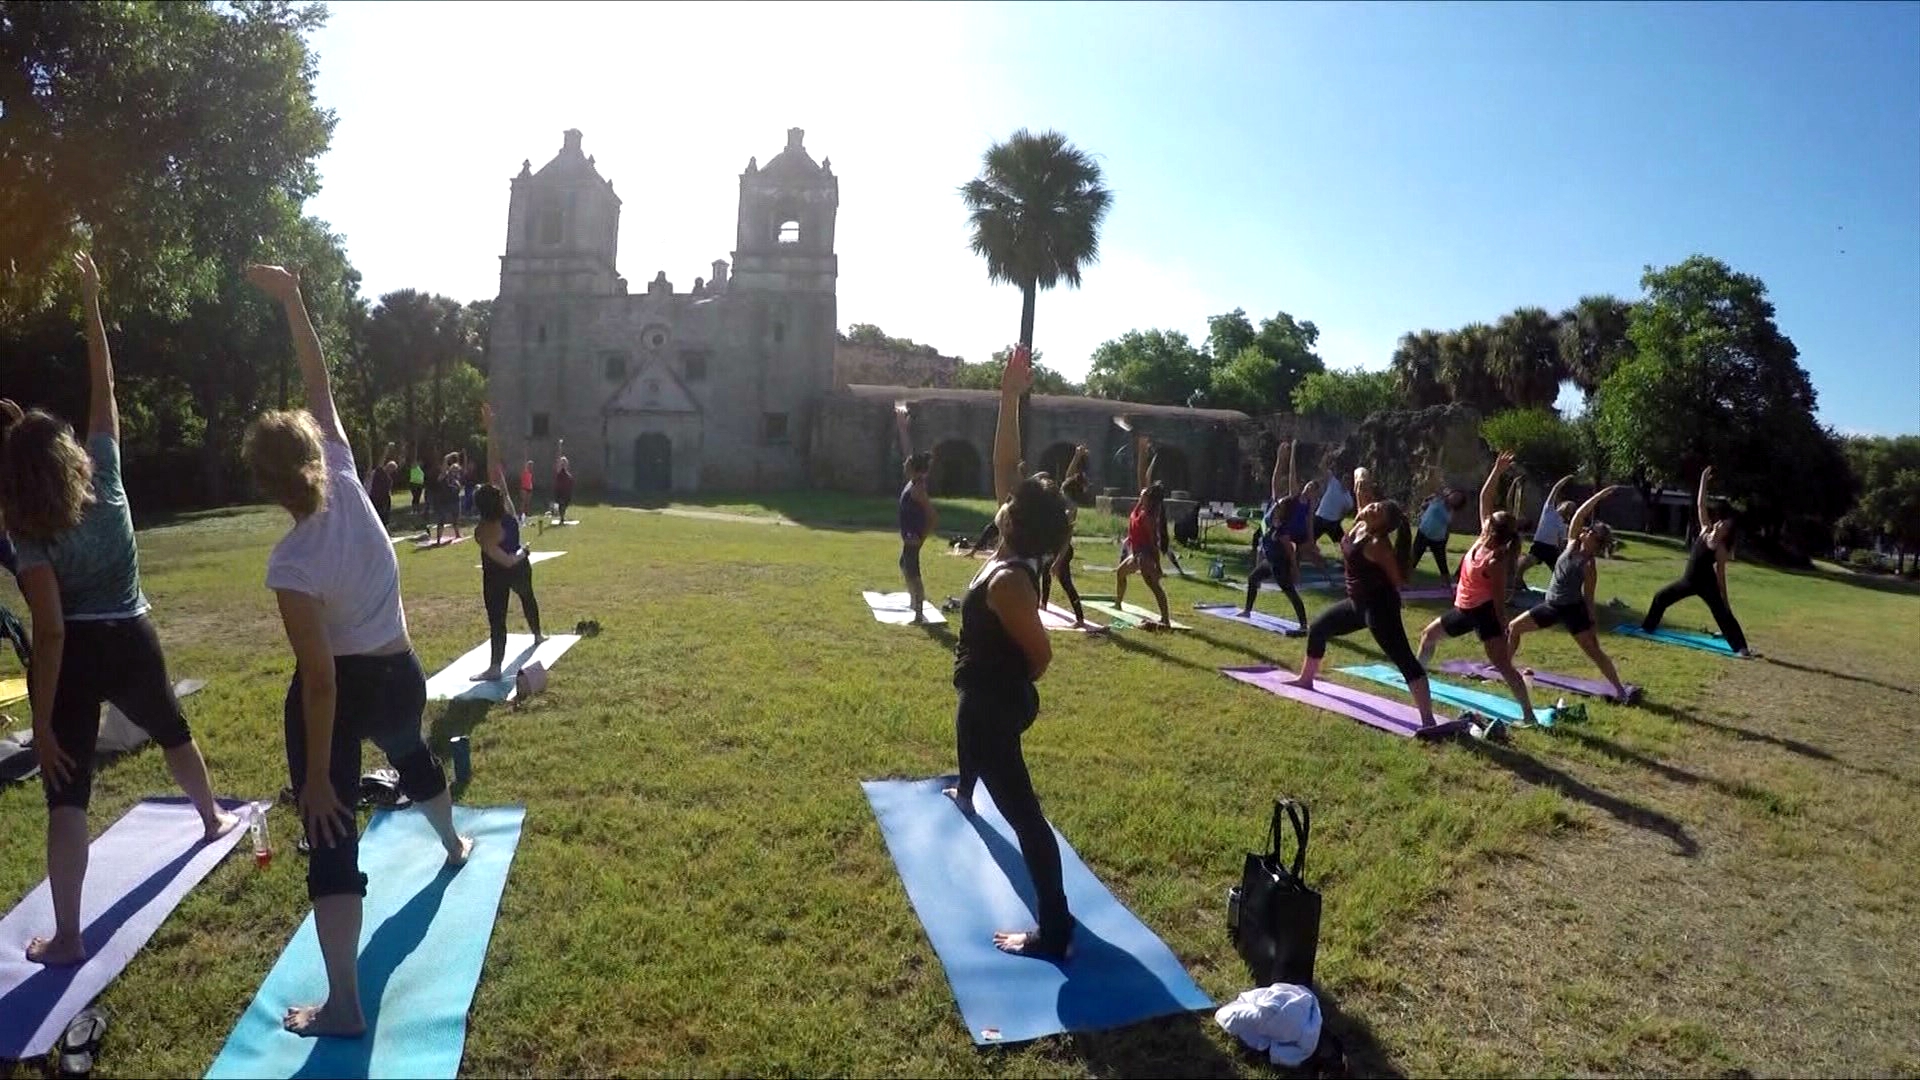 Mobile Om hosts yoga classes at San Antonio missions - KENS 5 TV